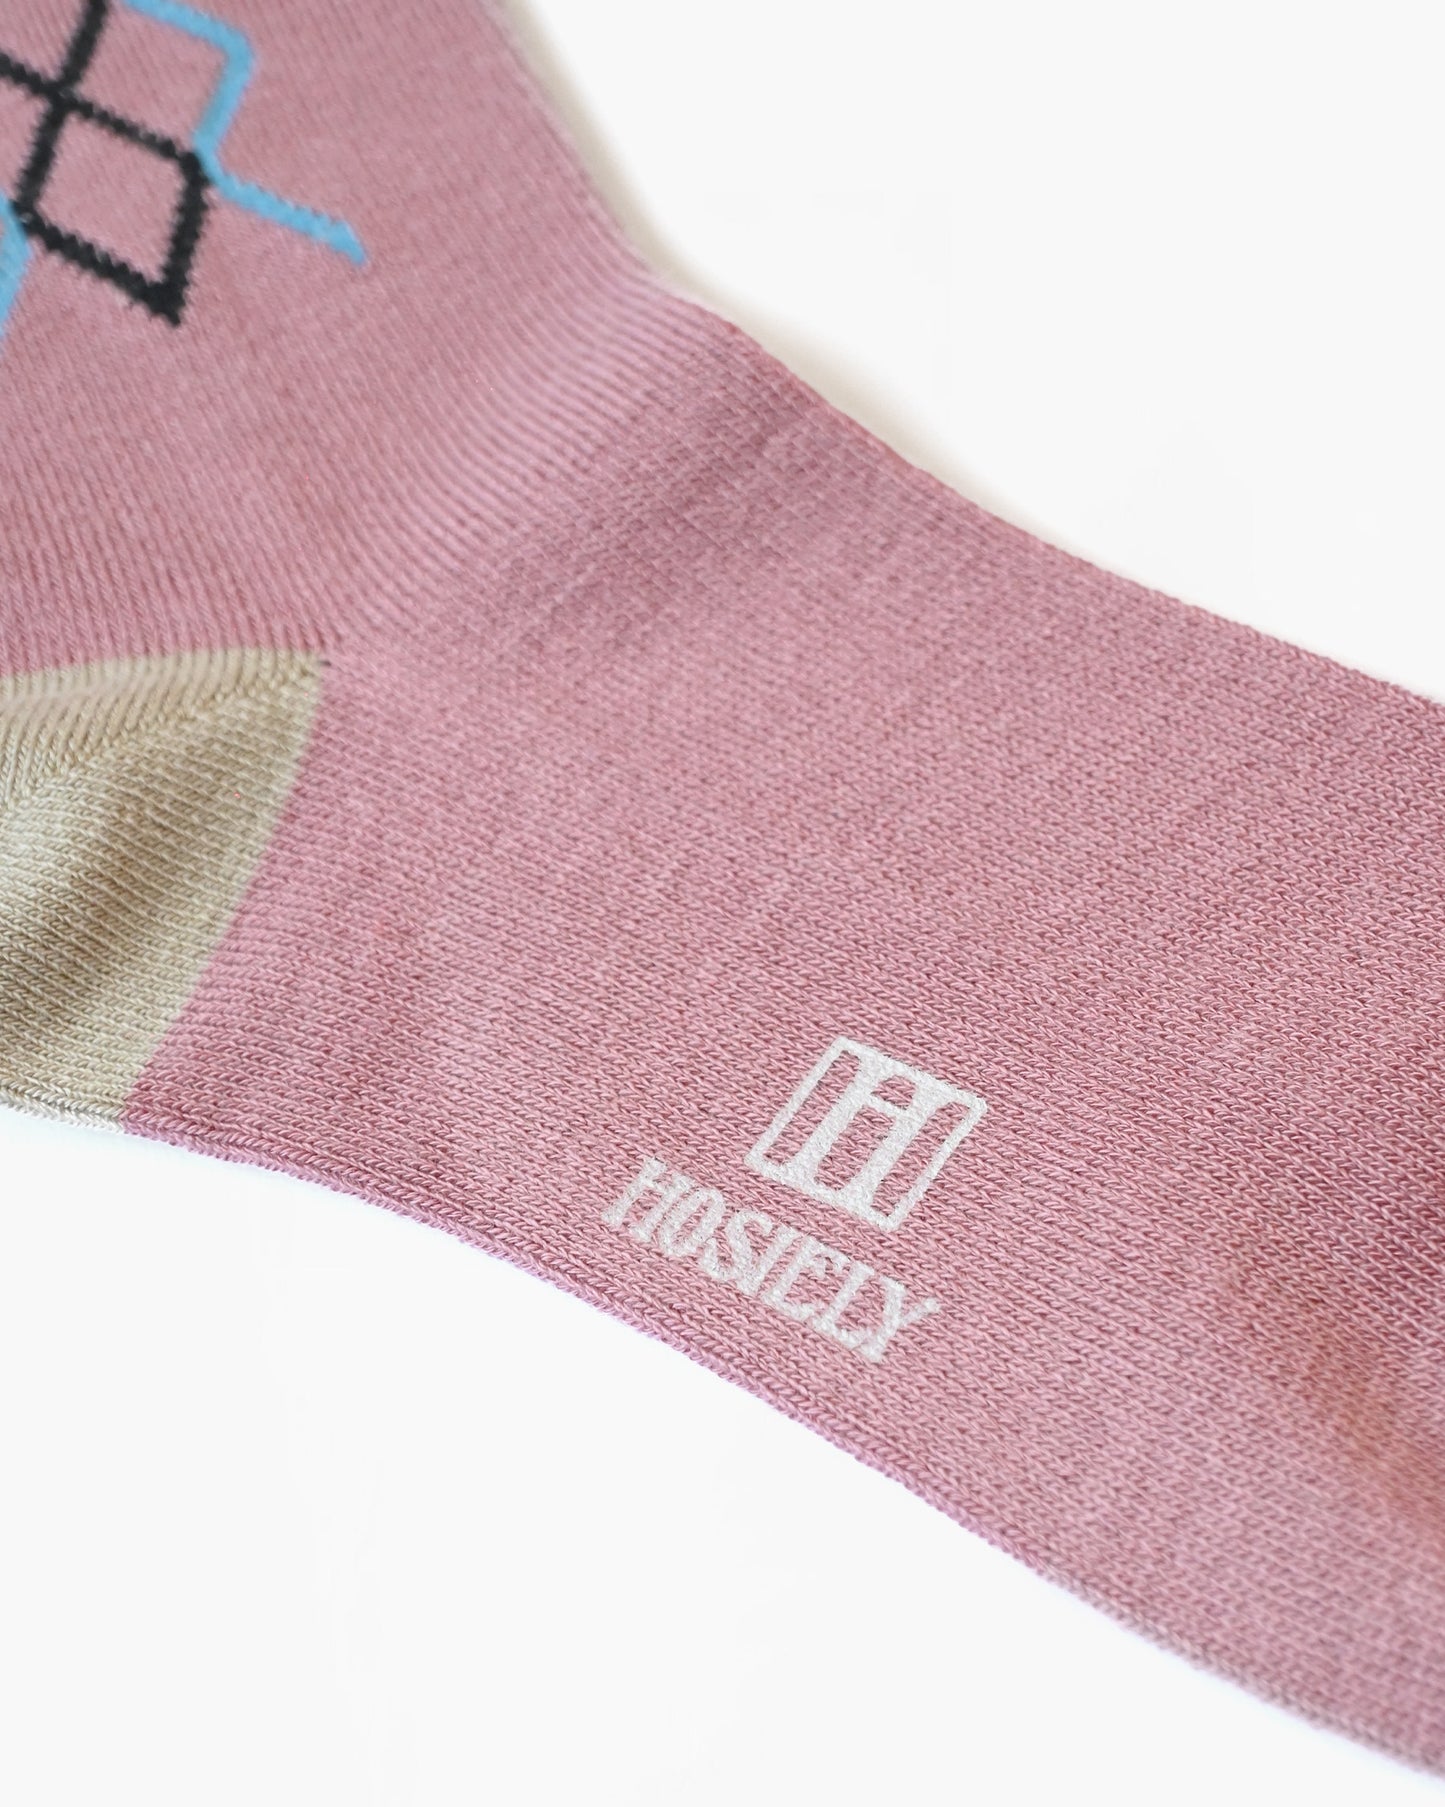 Argyle Socks - Pink